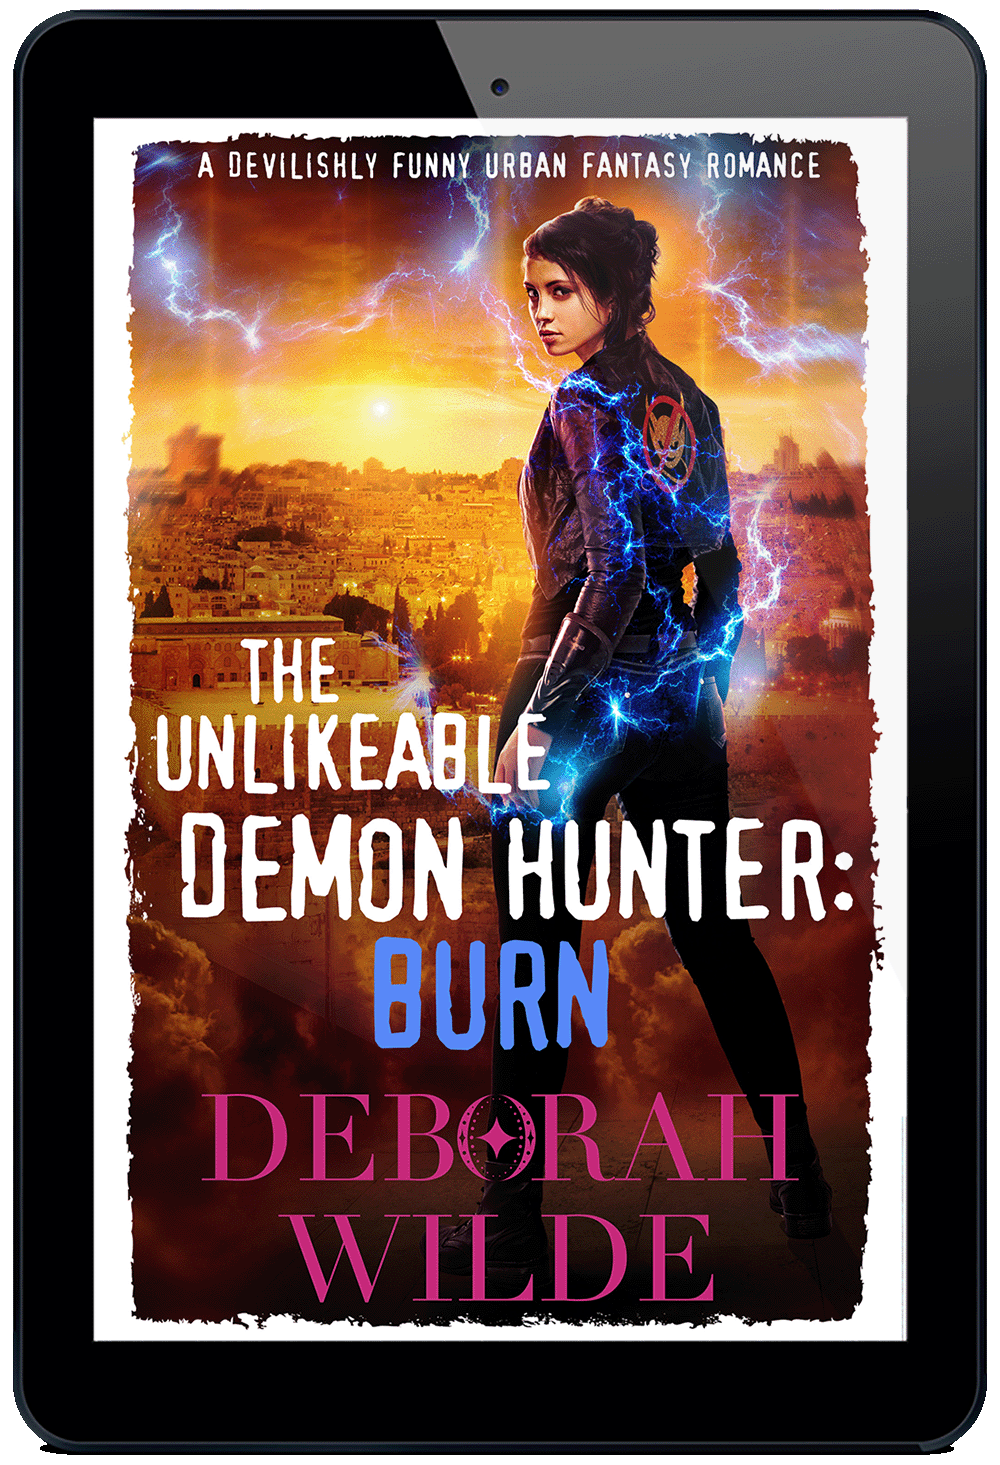 Unlikeable Demon Hunter: Burn. A devilishly funny urban fantasy romance by Deborah Wilde.